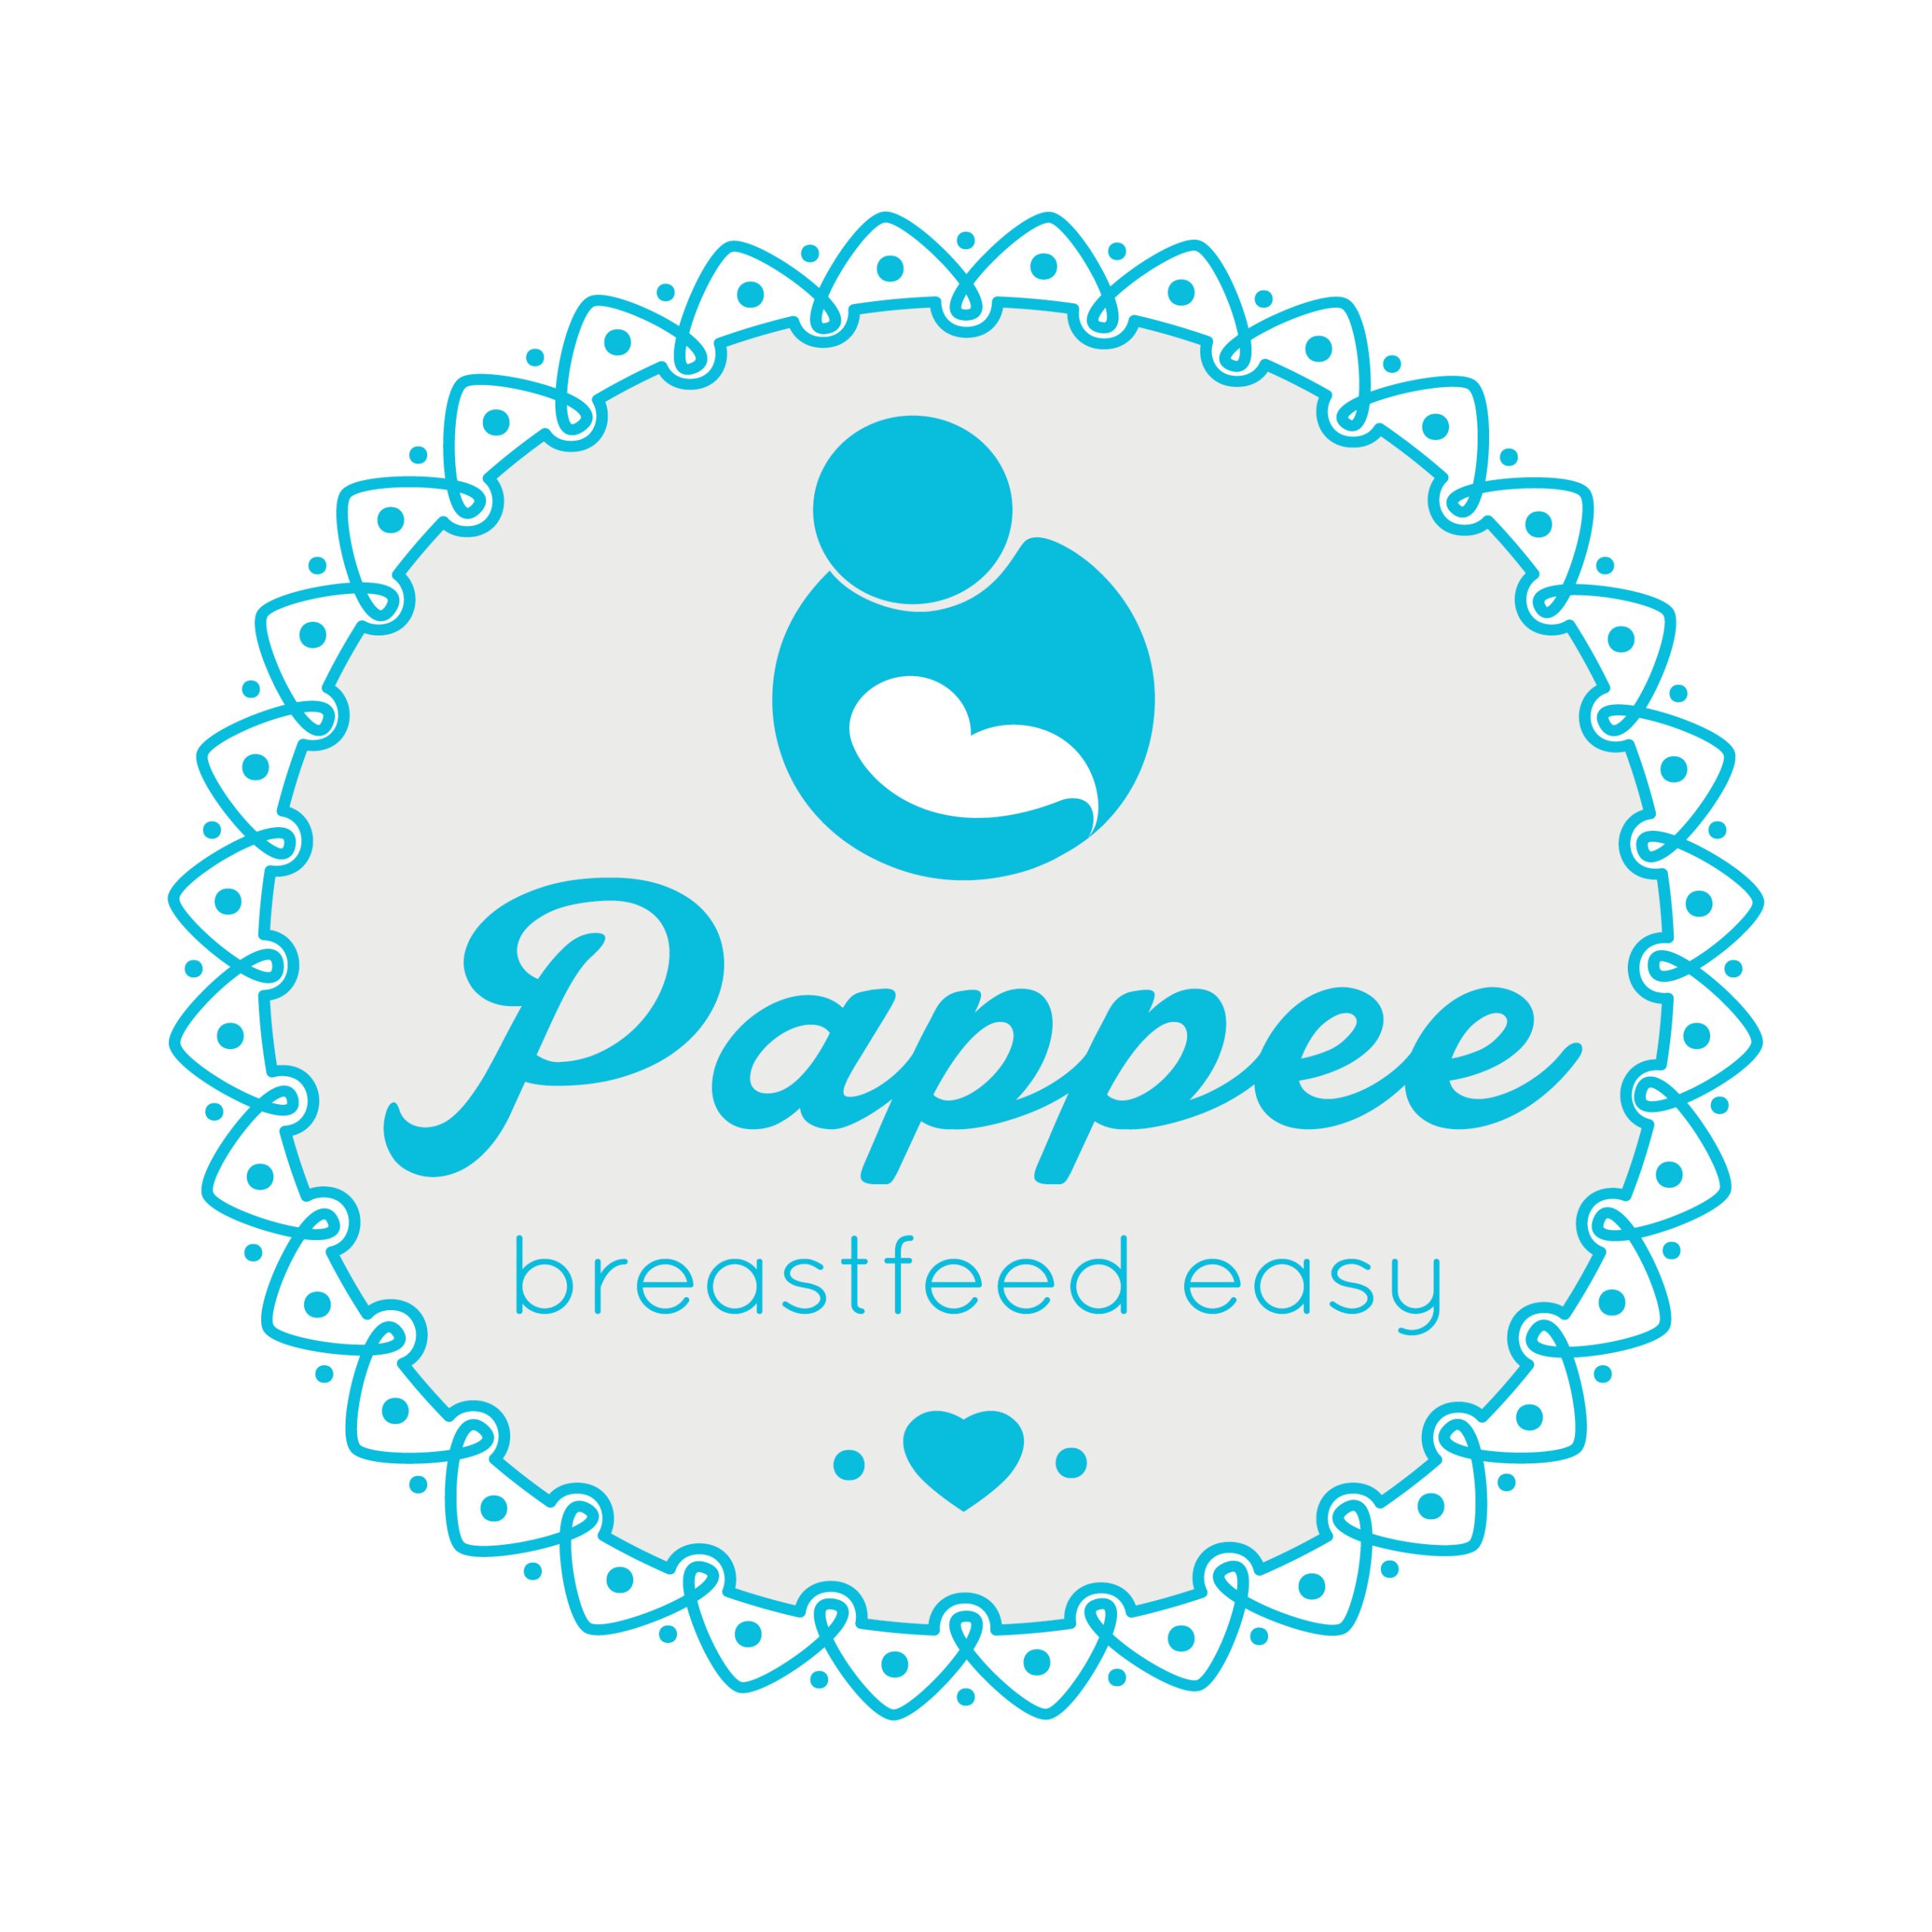 Pappee Breasteed Easy Logo Design